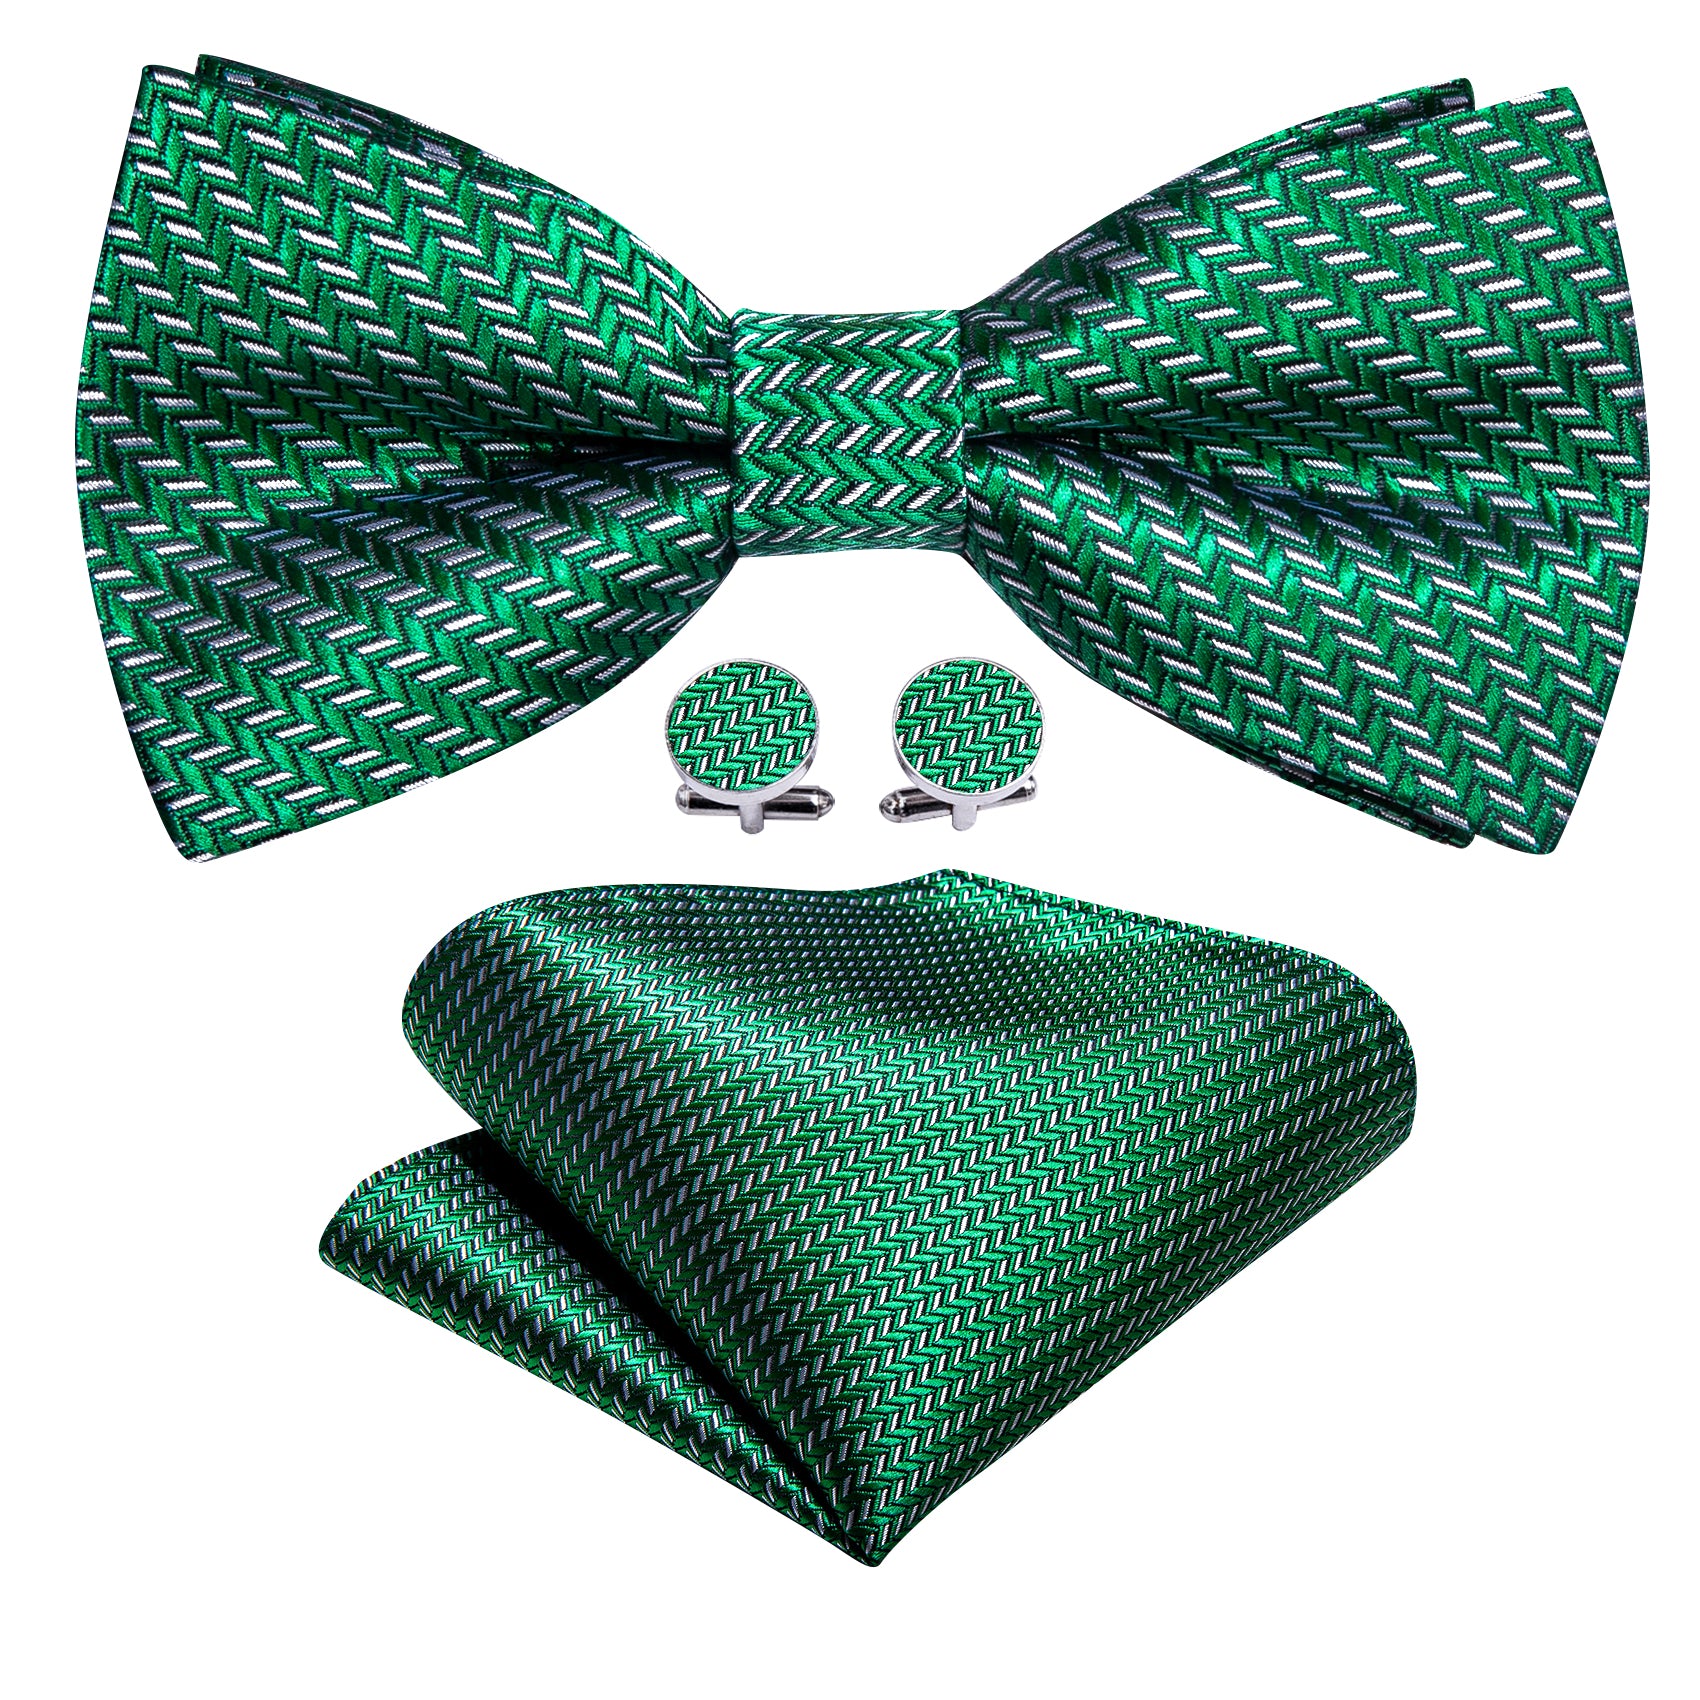 New Green White Striped Silk Pre-tied Bow Tie Hanky Cufflinks Set